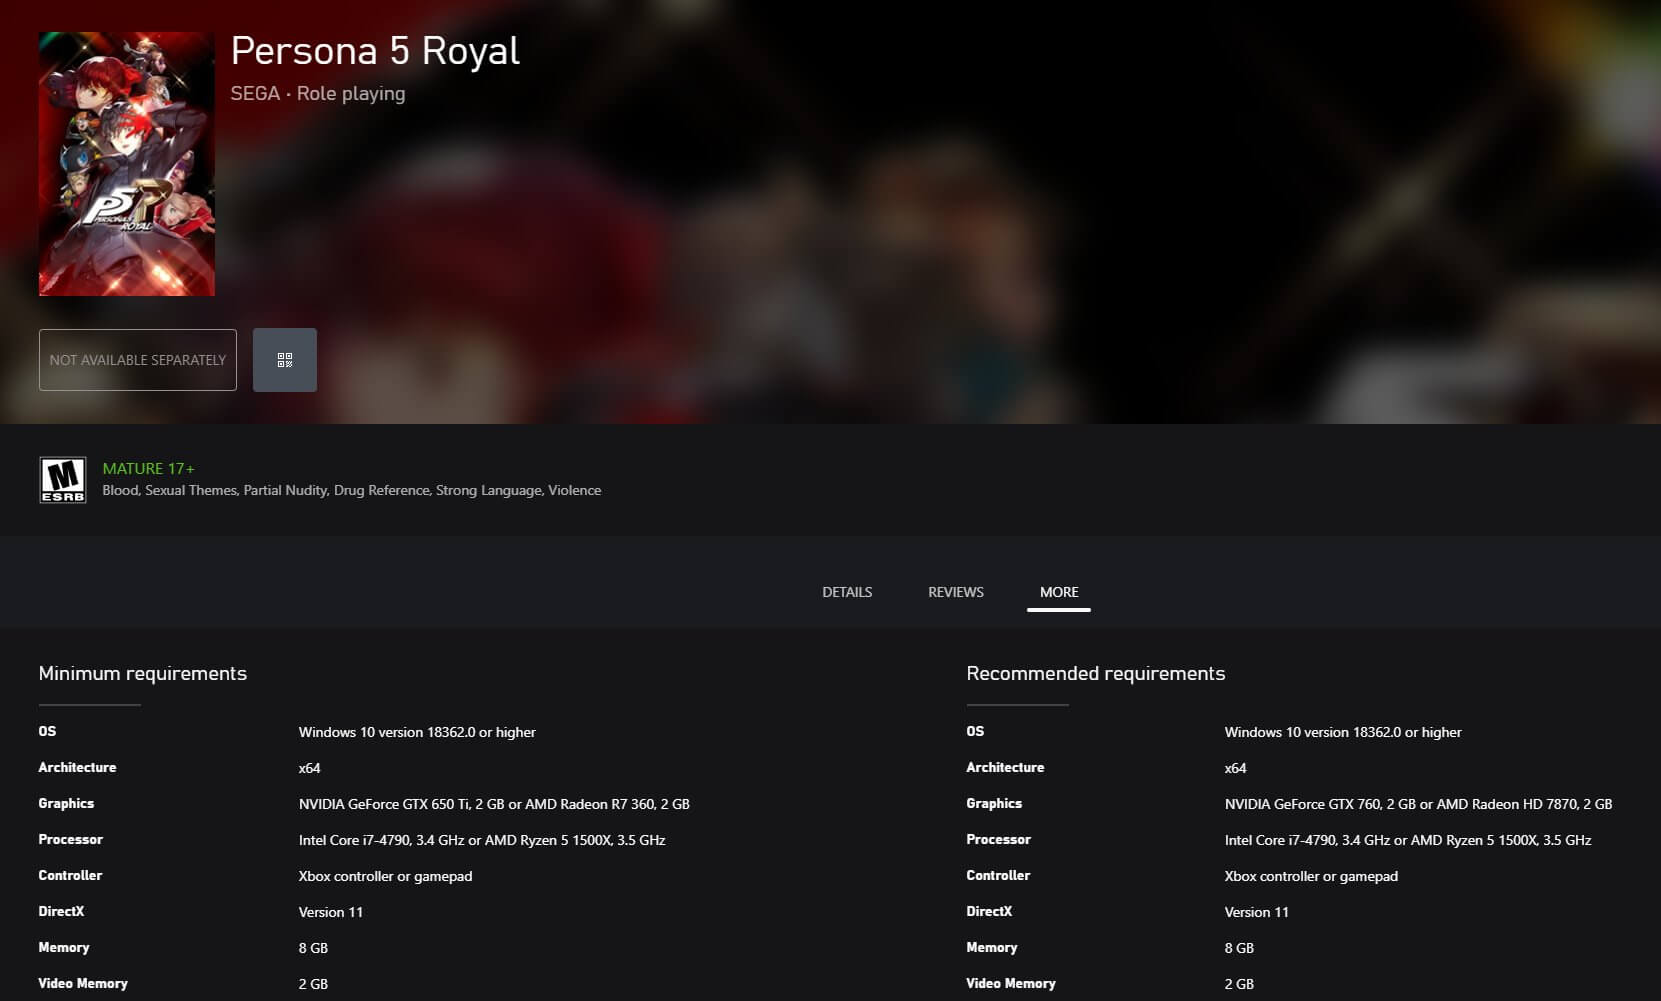 Persona 5 Royal PC Requirements